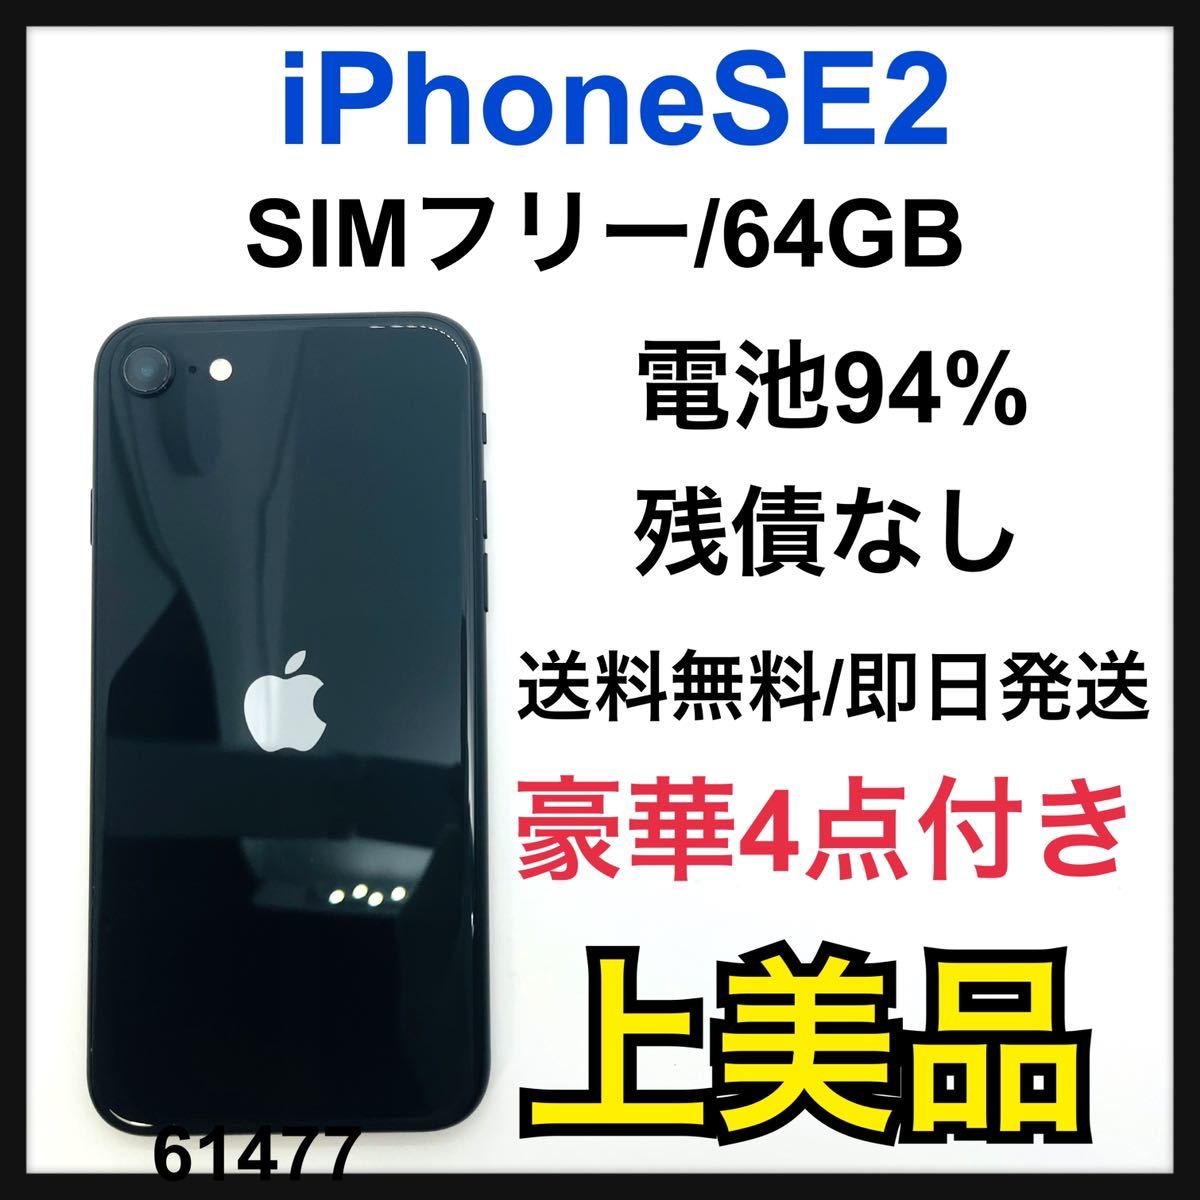 B美品】iPhone SE2 ブラック 256 GB SIMフリー 本体（84240）｜PayPay 